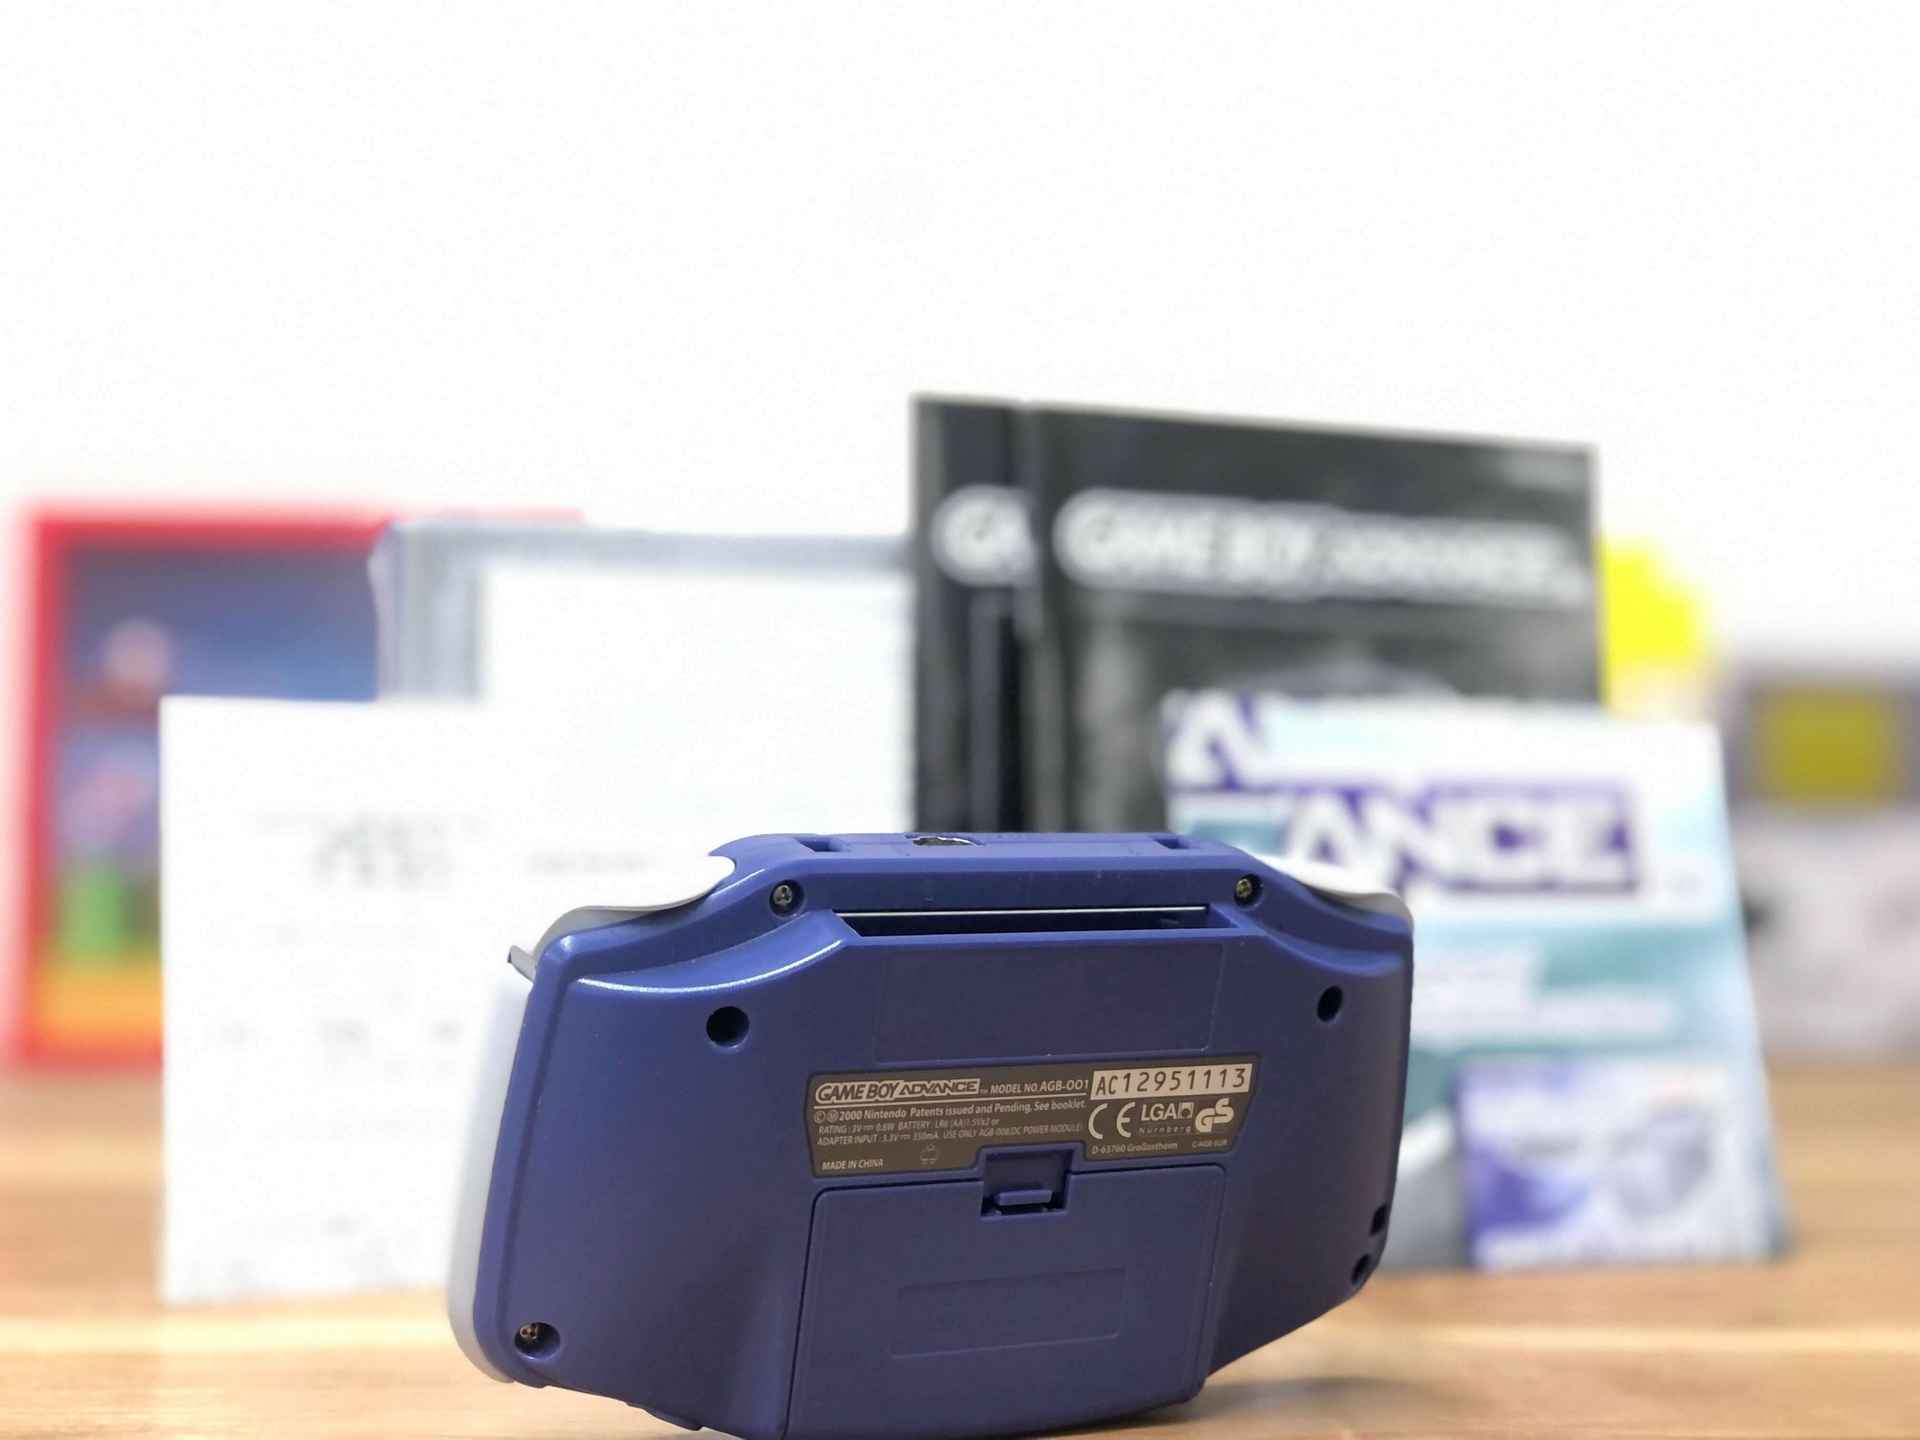 Gameboy Advance Blue [Complete] - Gameboy Advance Hardware - 3